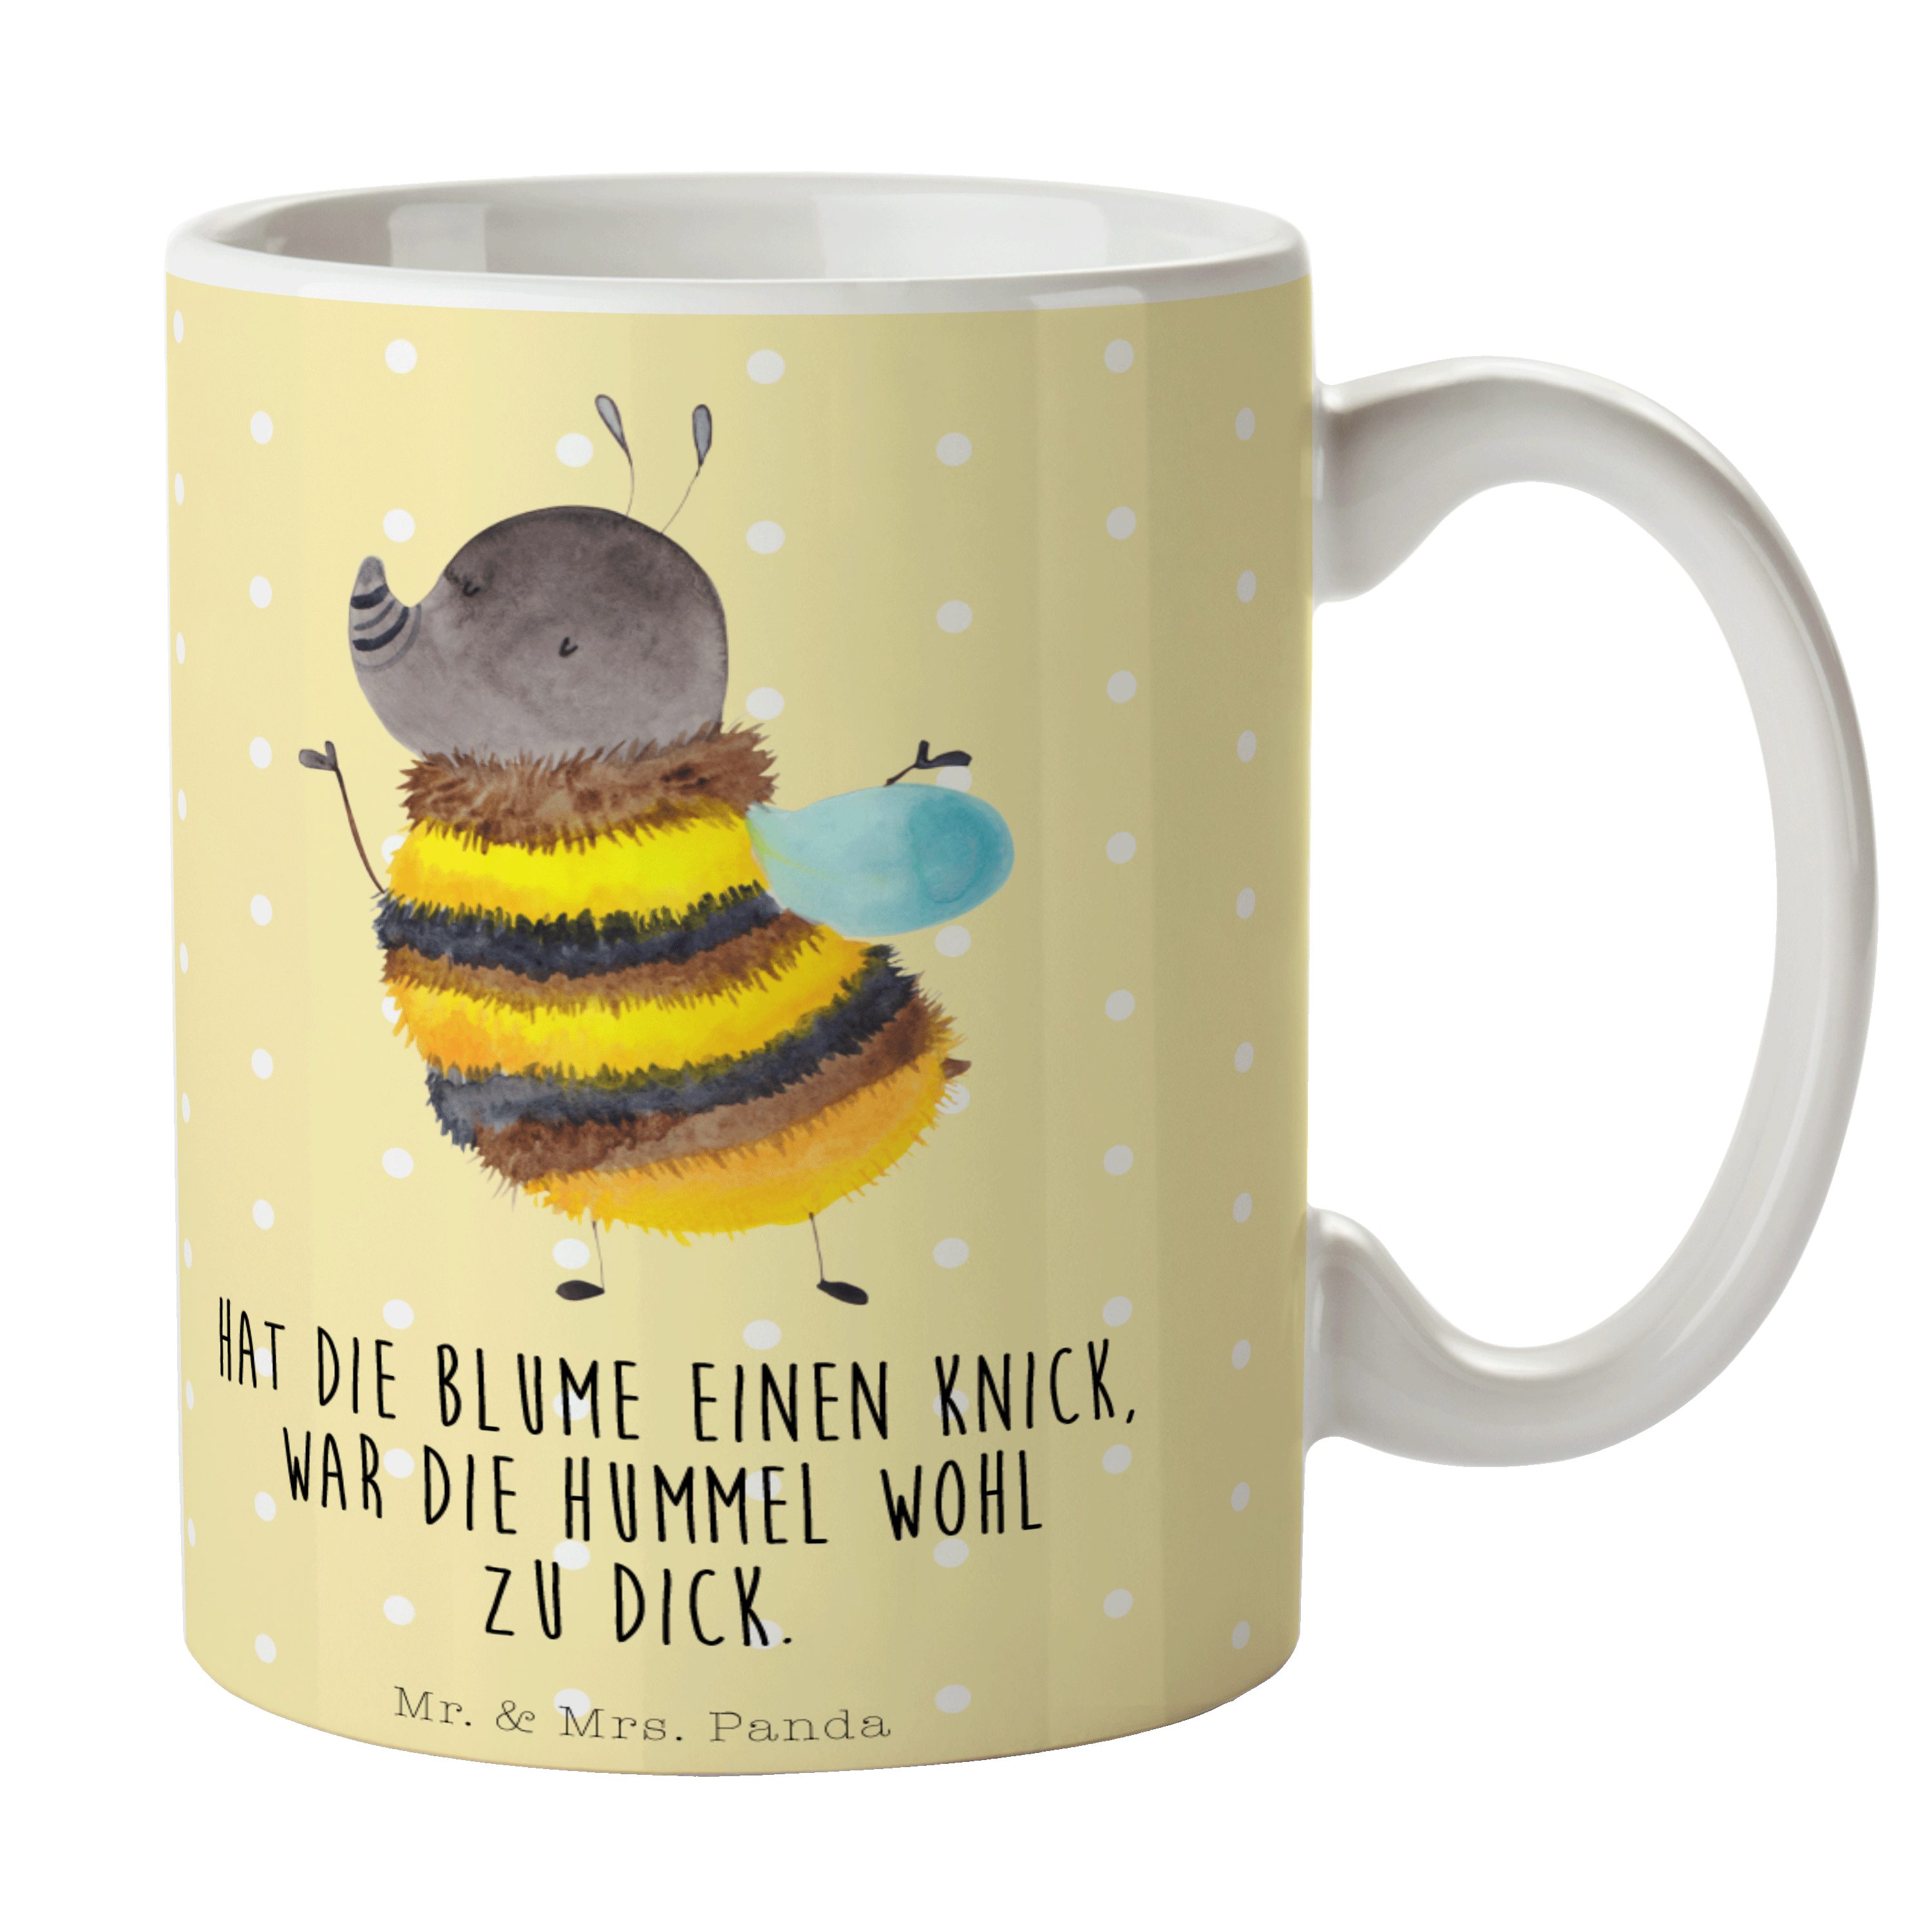 Mr. & Mrs. Panda Tasse Hummel flauschig - Gelb Pastell - Geschenk, Tasse, Keramiktasse, Tass, Keramik